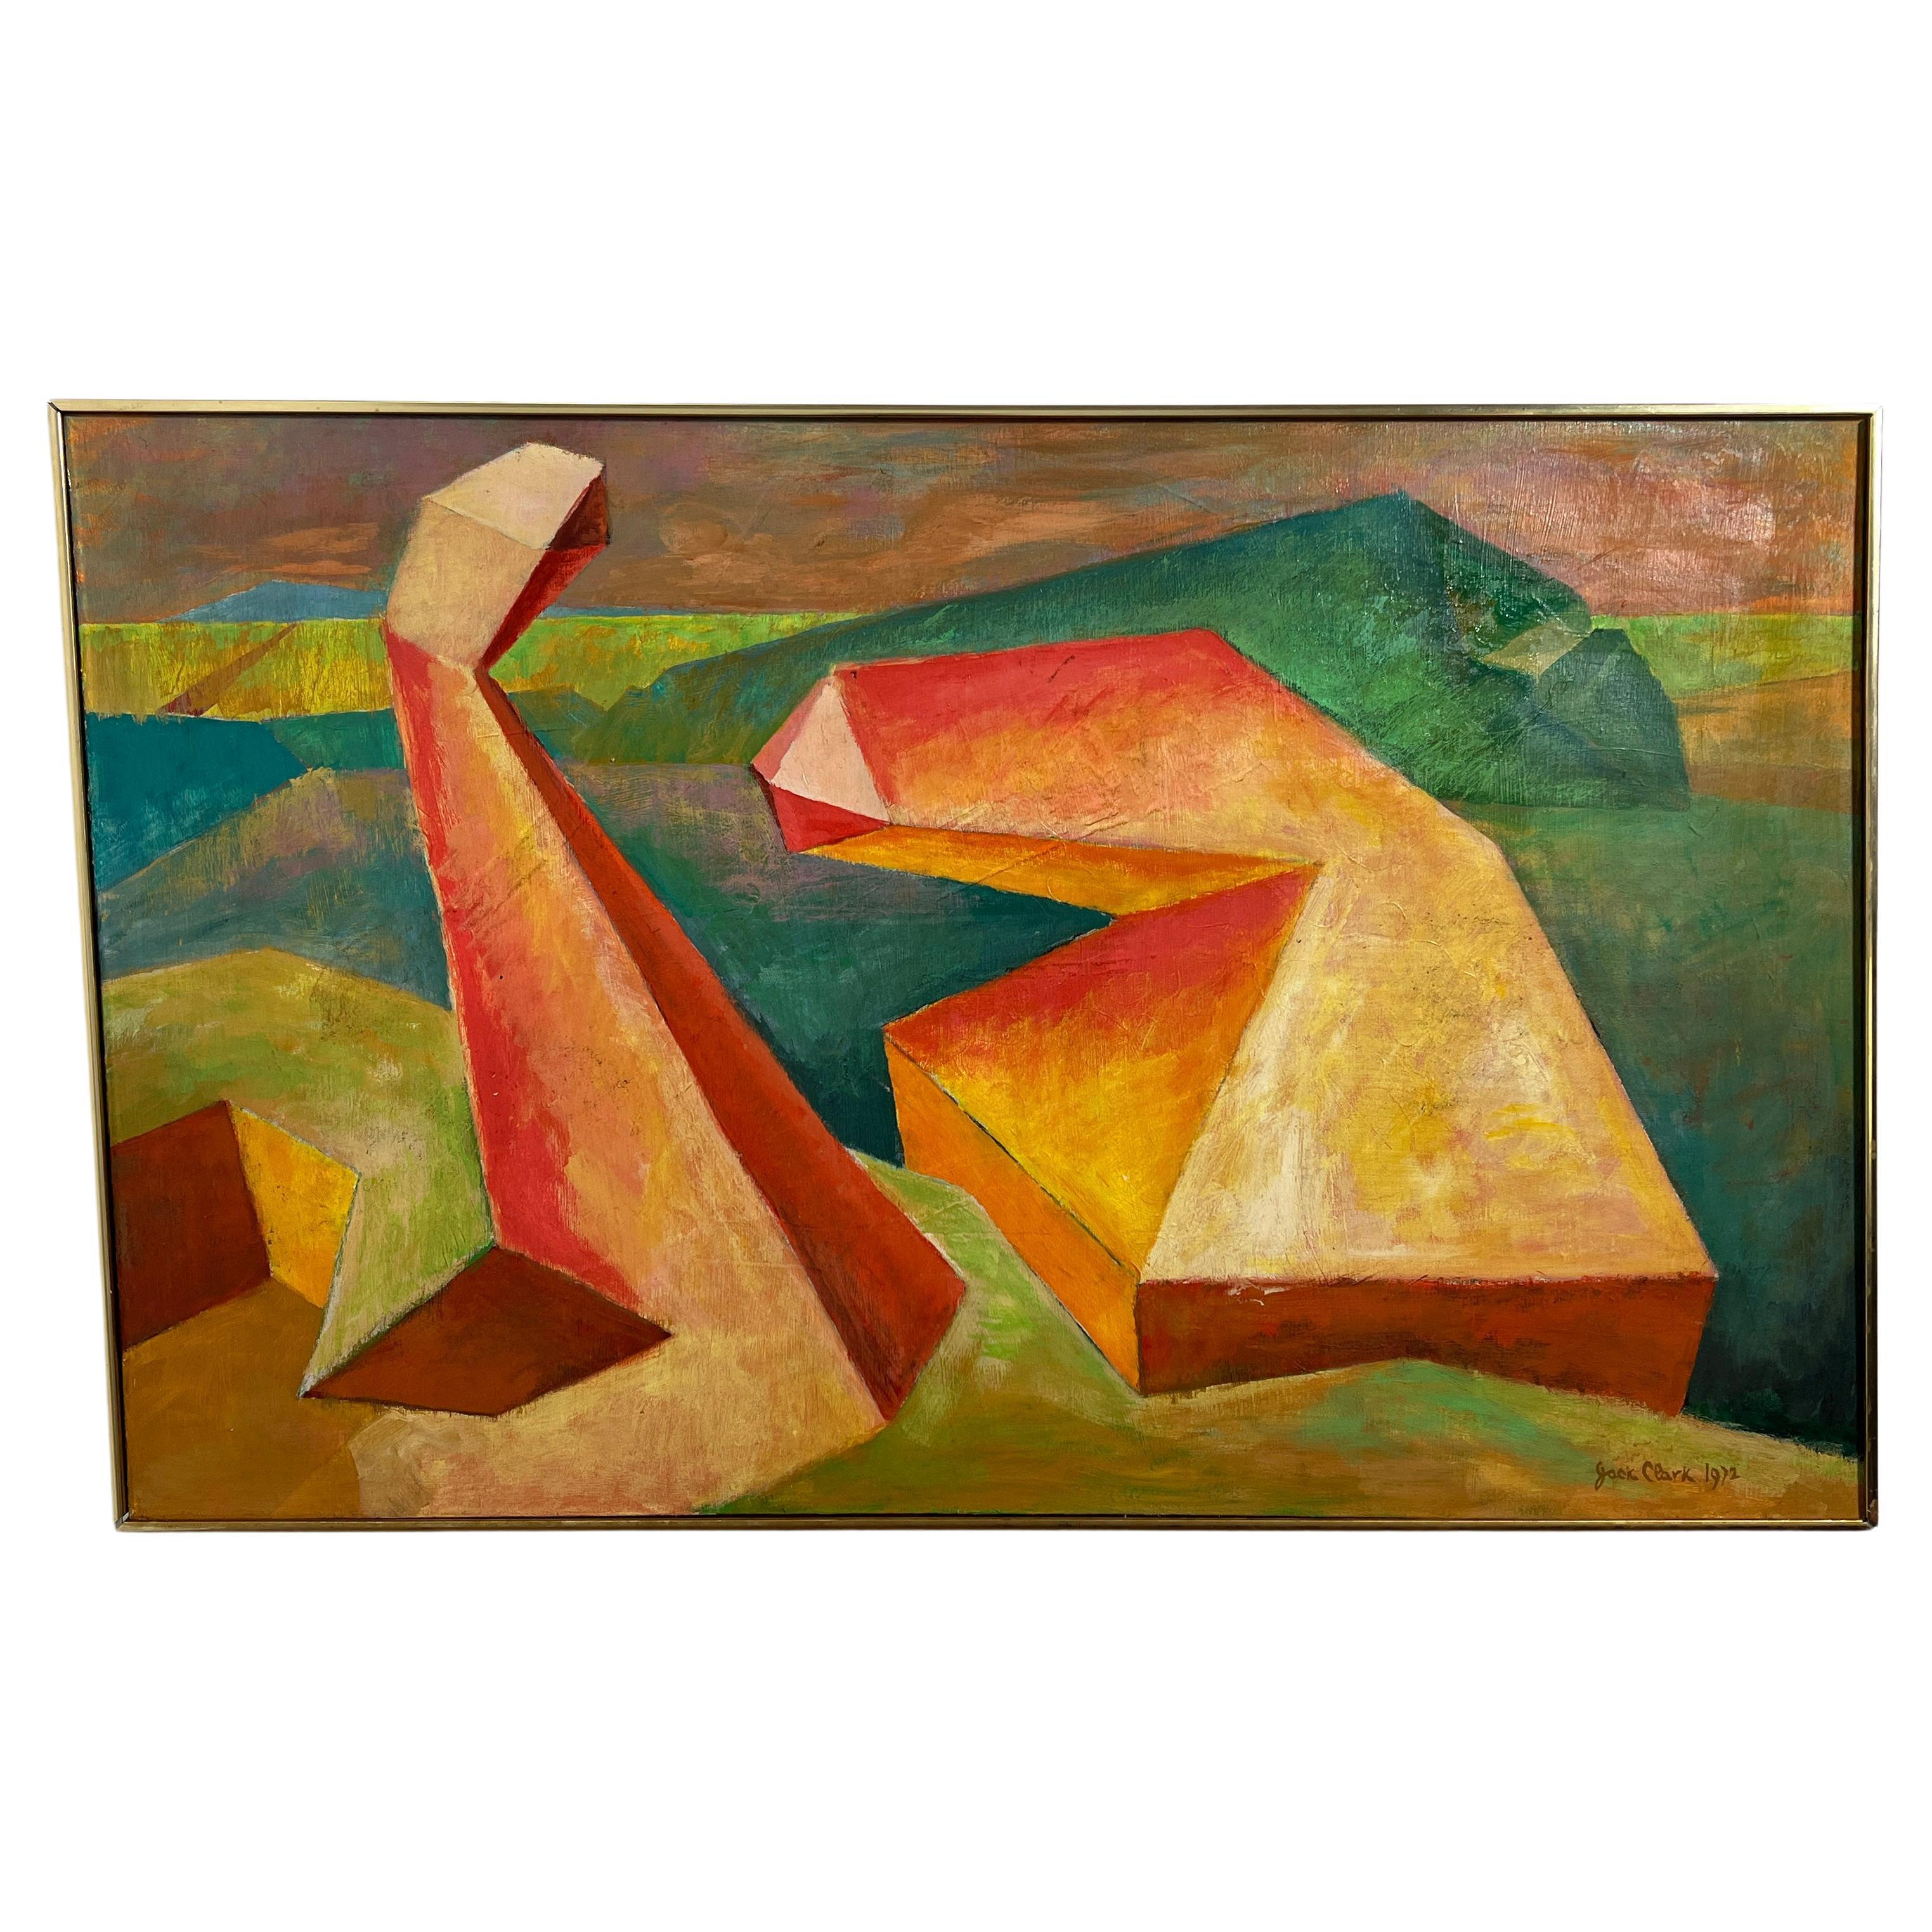 Large Cubist Landscape Abstract Painting Signed Jack Clark, d. 1972 For Sale